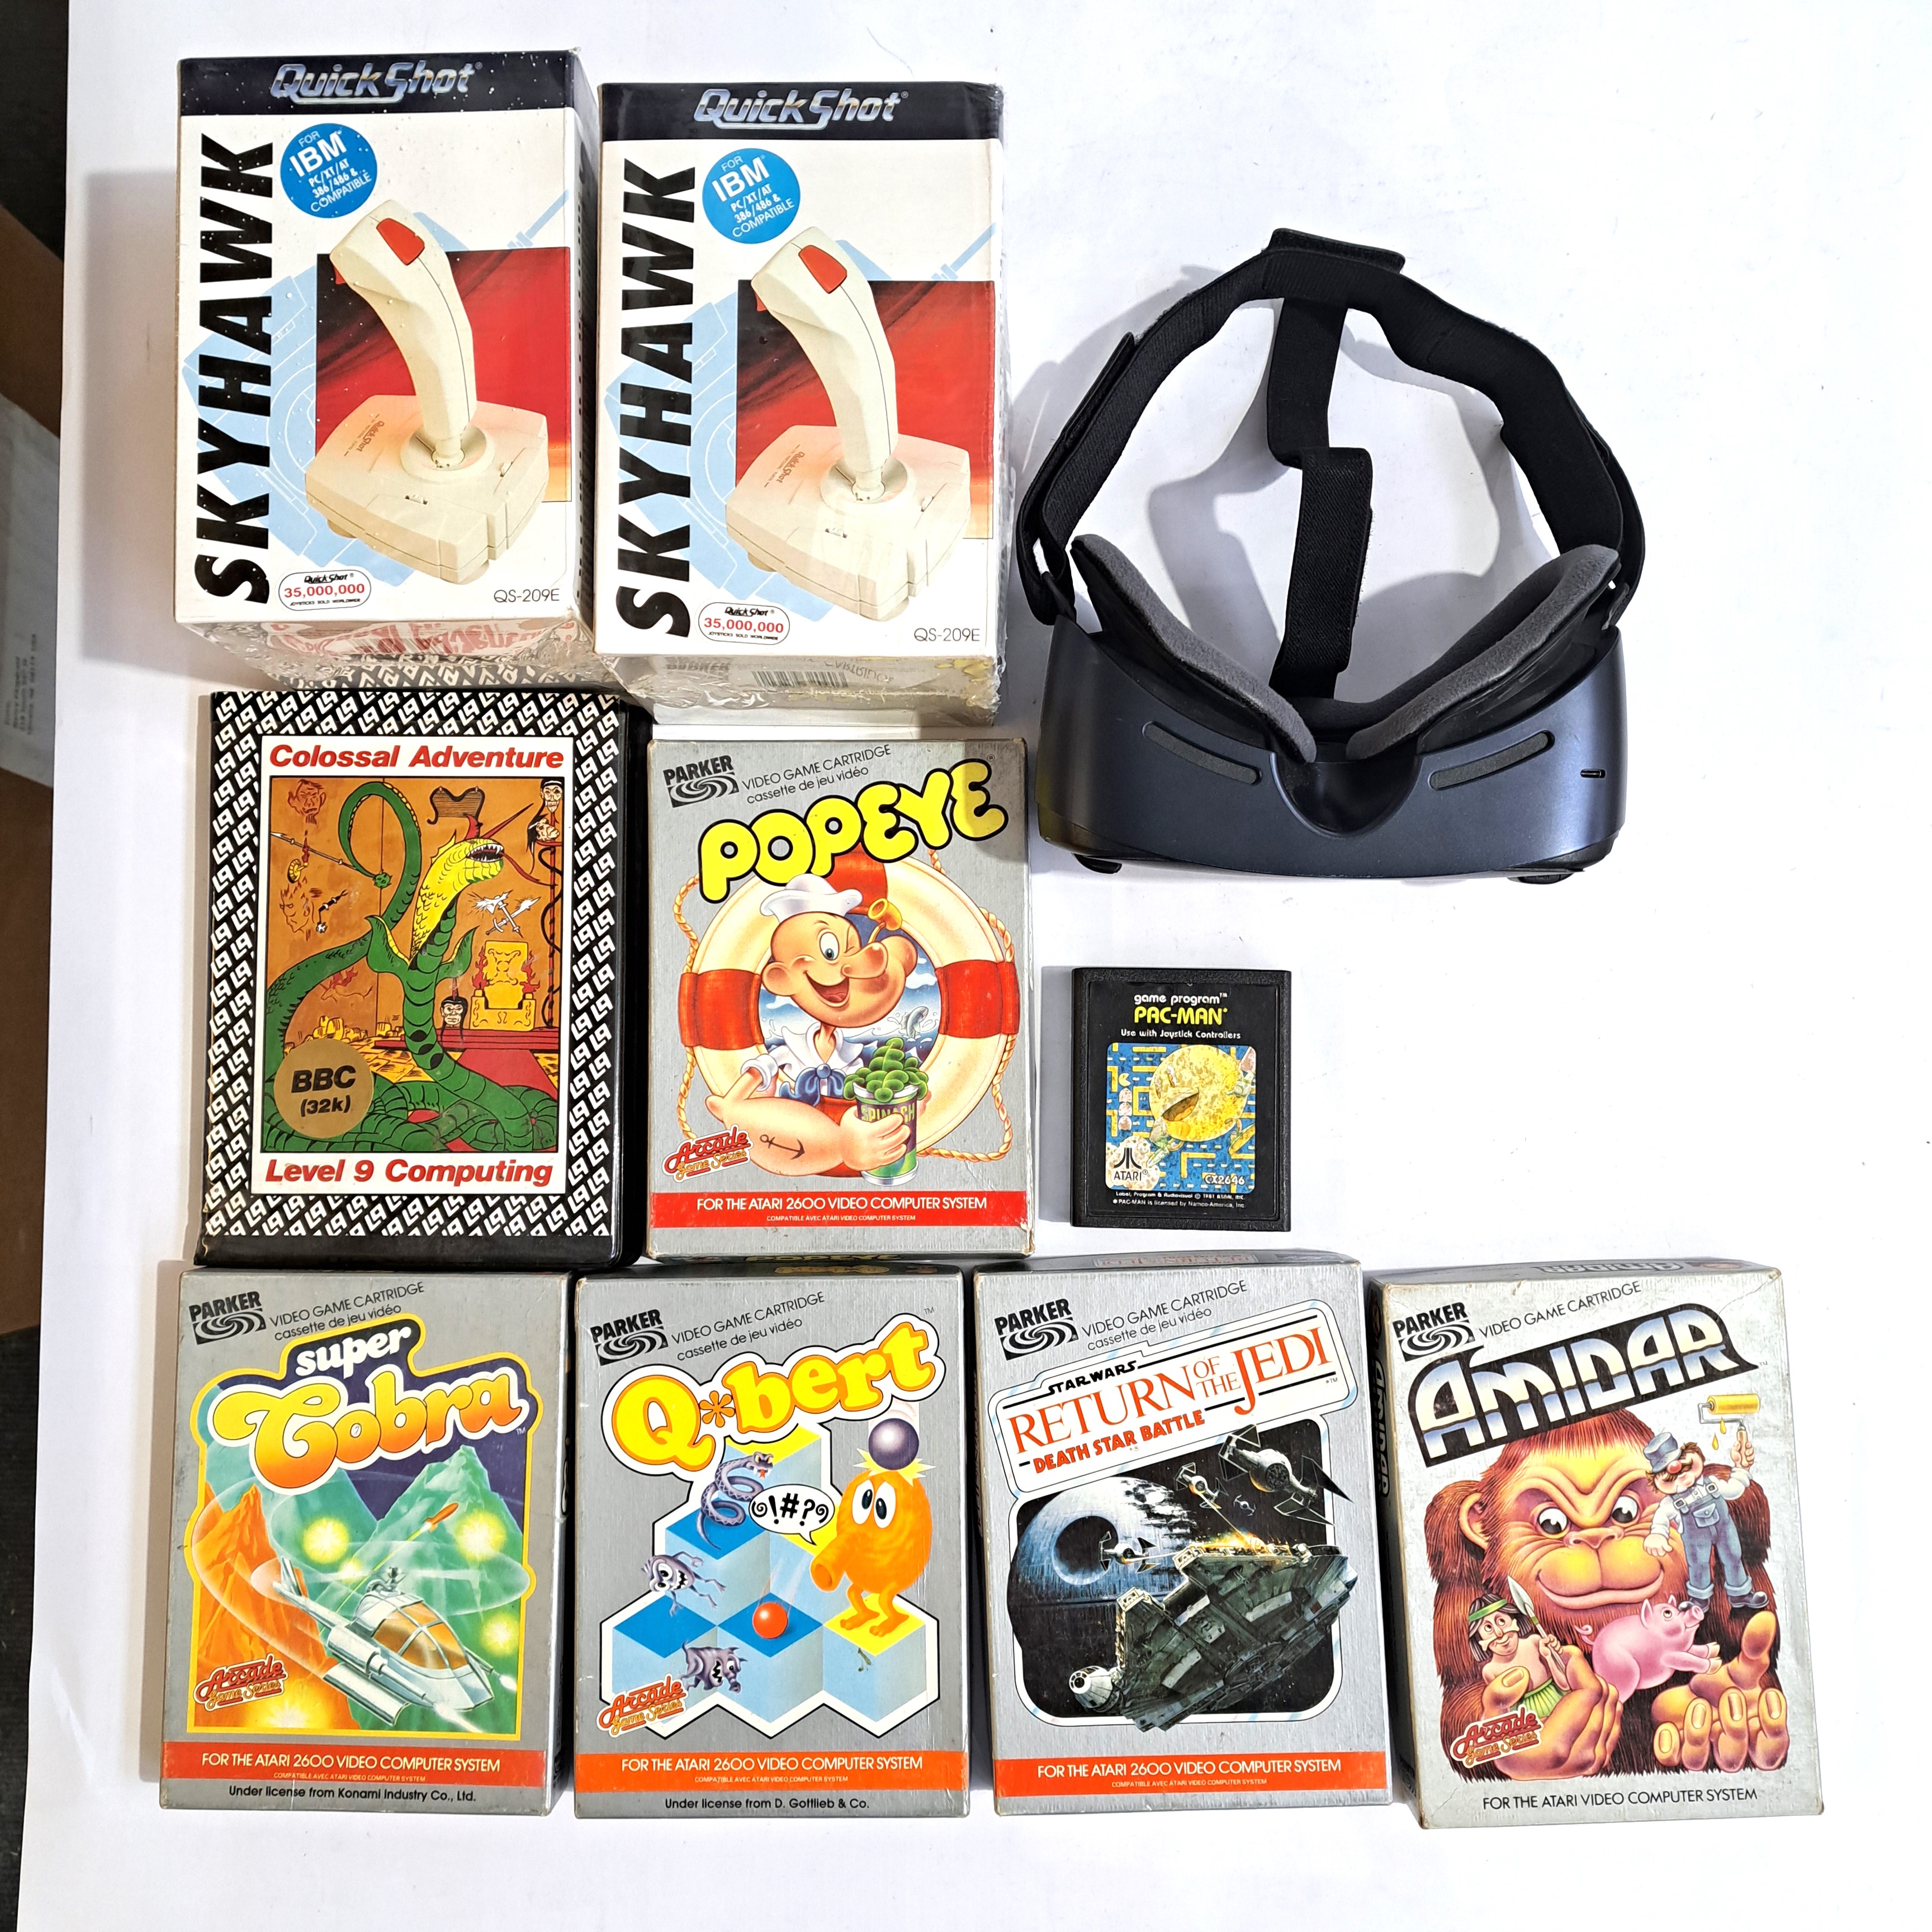 Vintage/Retro Gaming. Parker, Sega, Atari, IBM and similar - Image 2 of 3